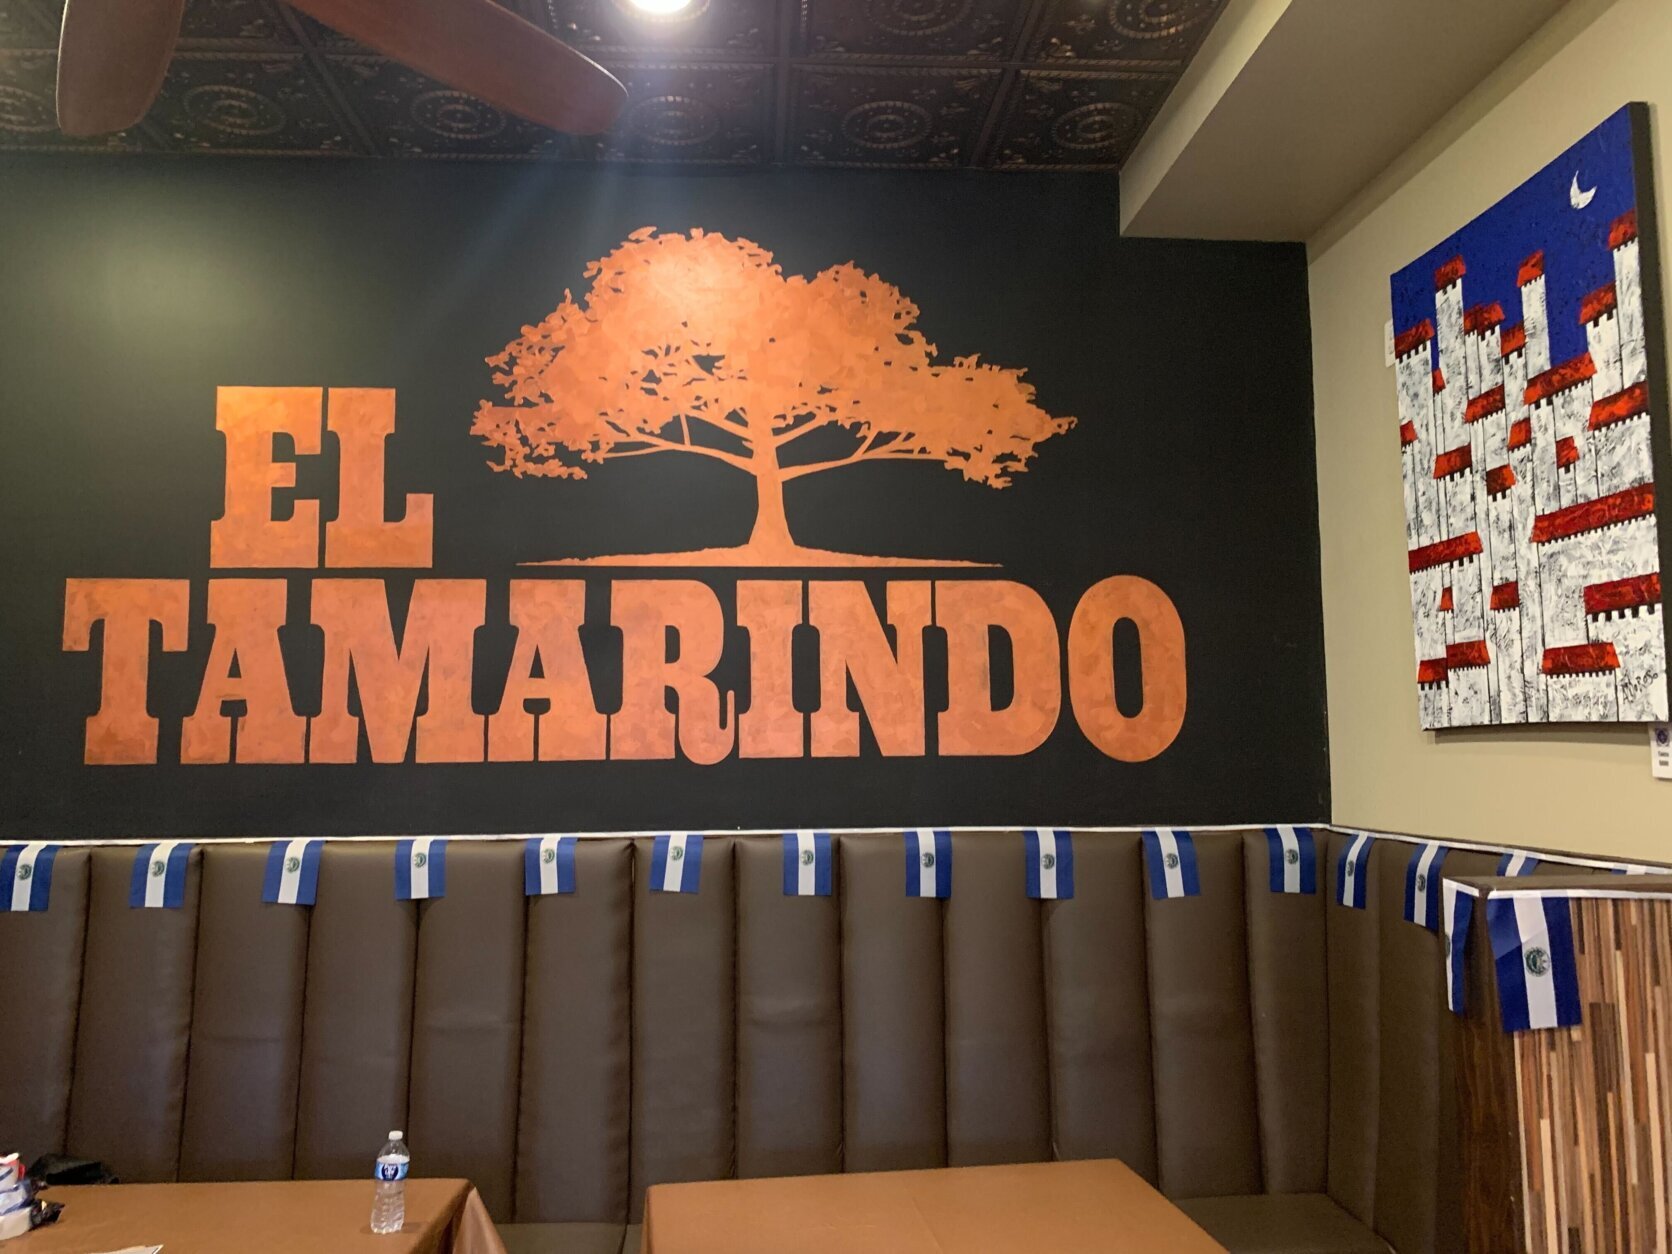 a wall that says El Tamarindo inside the restaurant